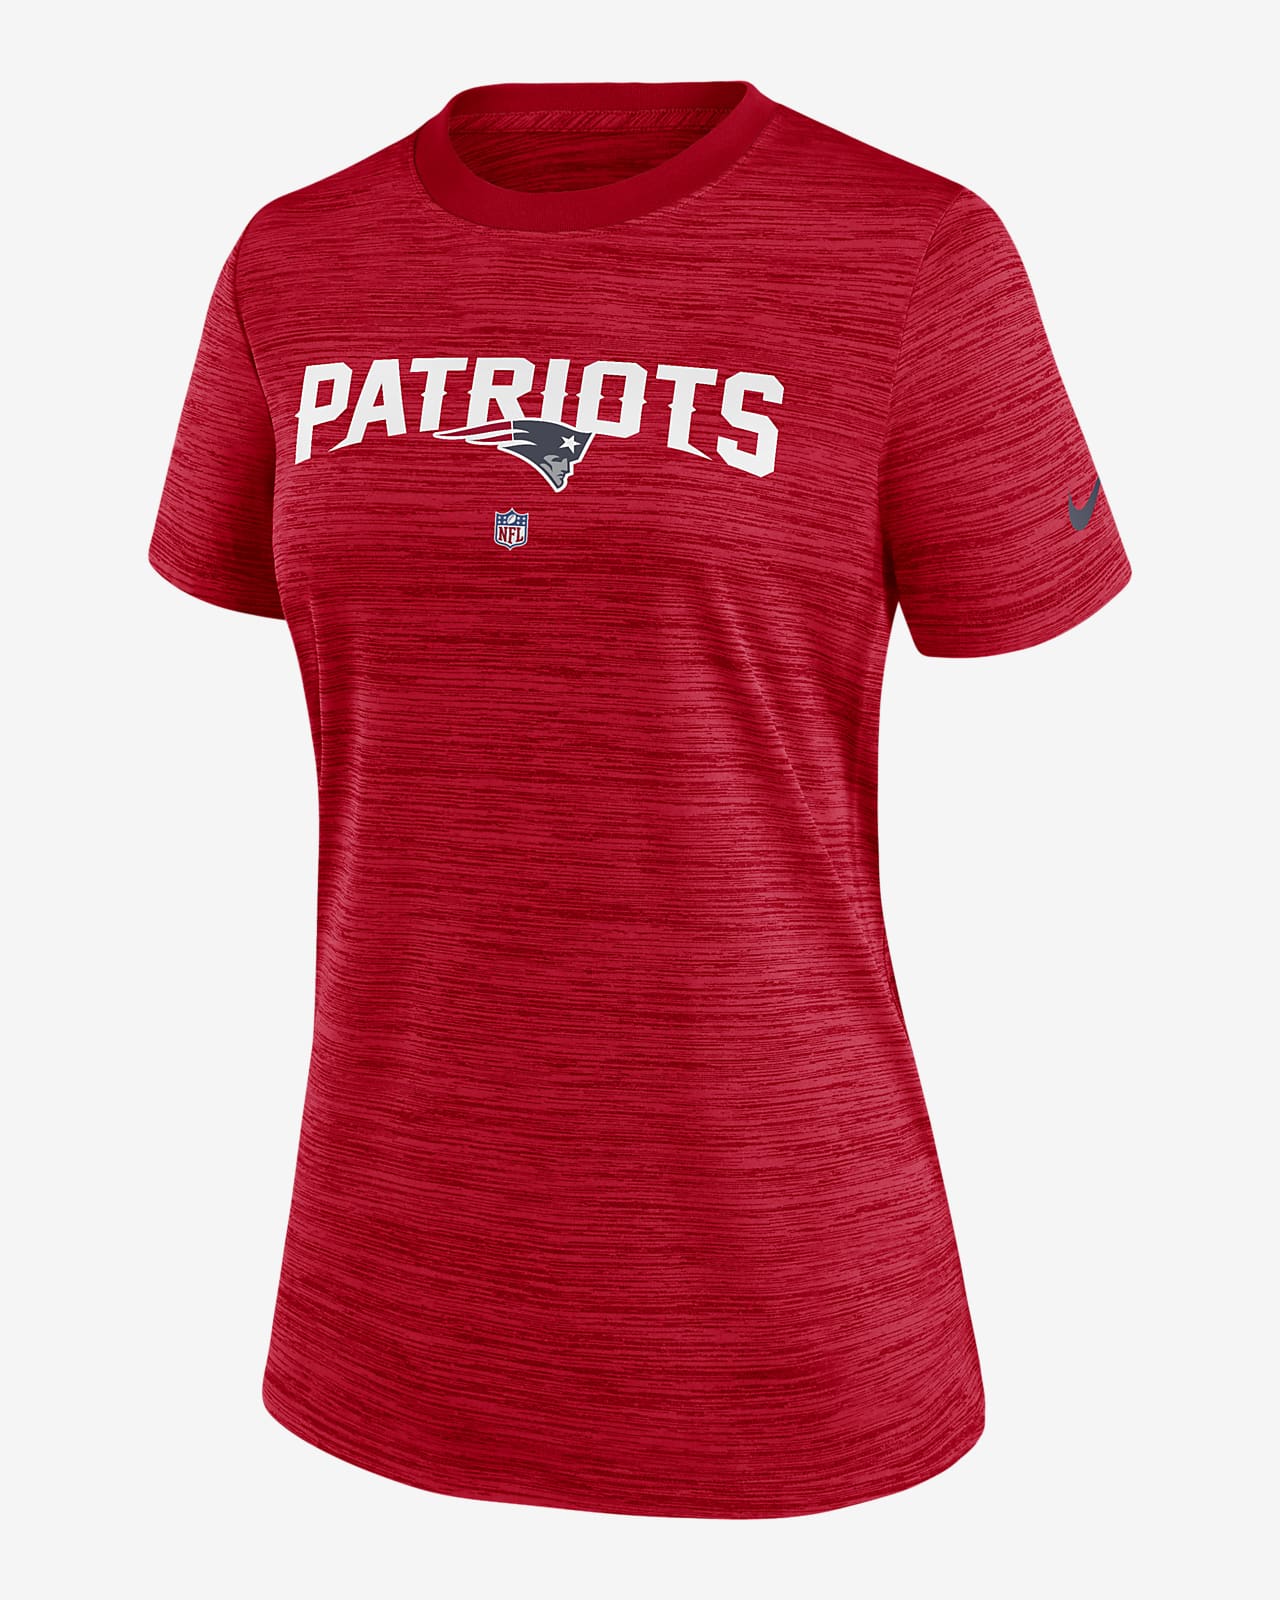 Nike Dri-FIT Sideline Velocity (NFL New England Patriots) Women's T-Shirt